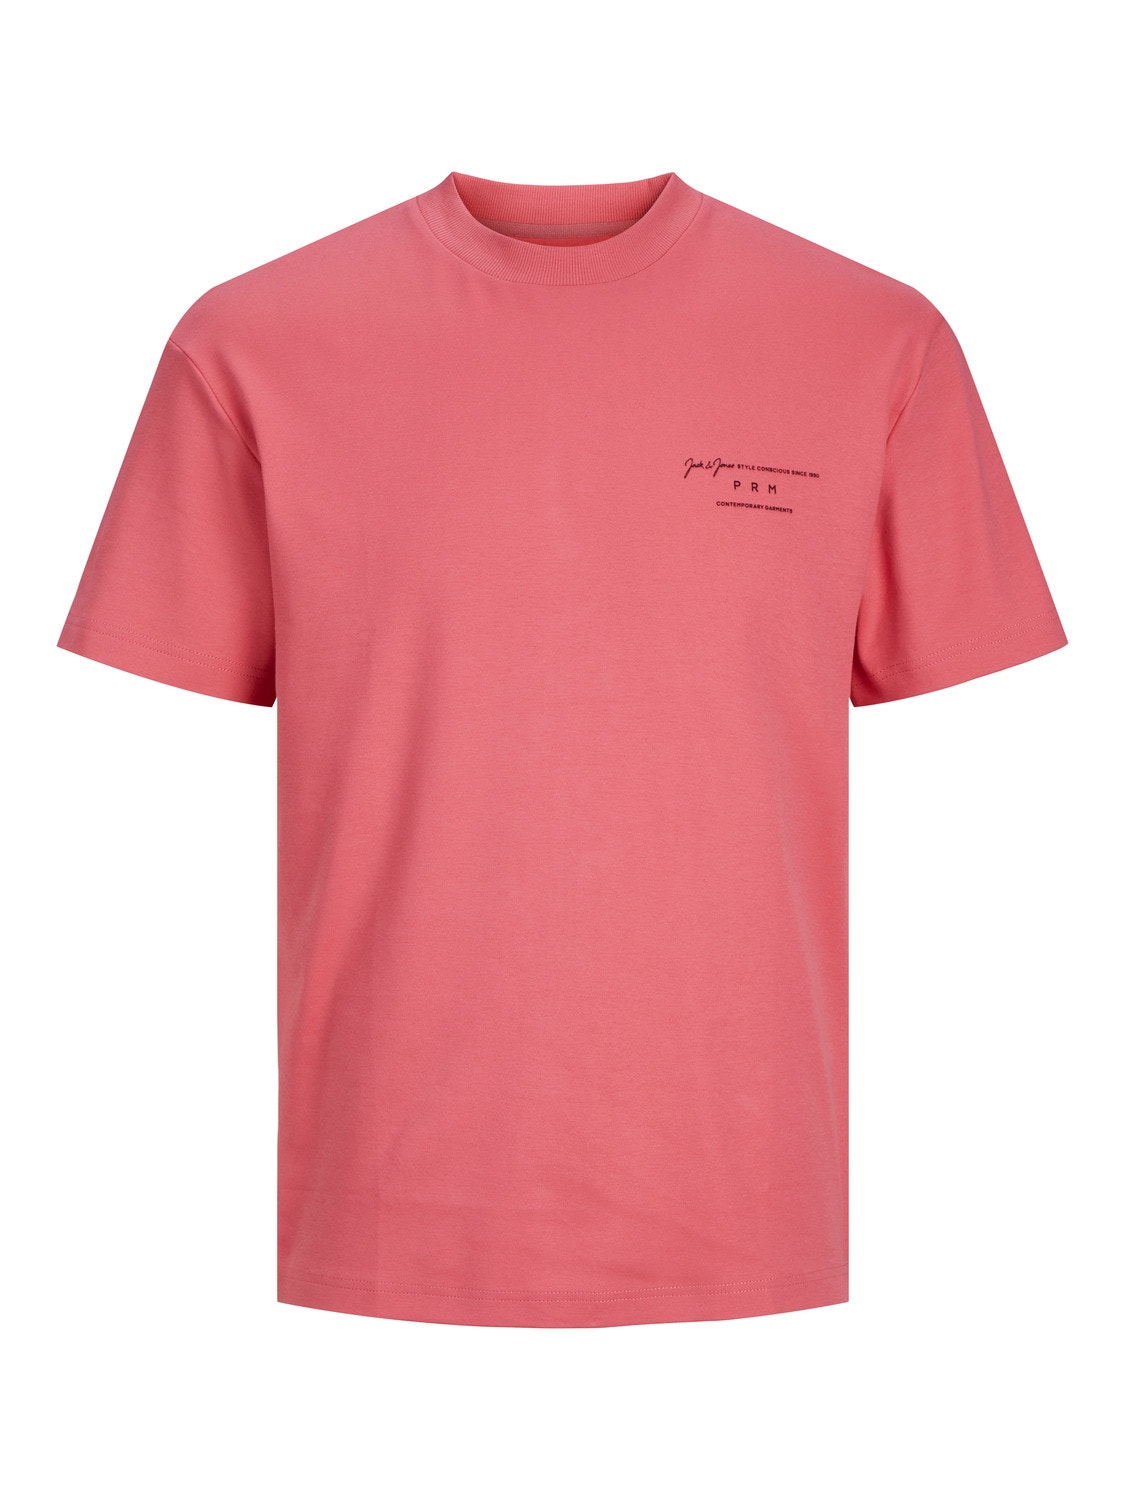 Jack & Jones Camiseta Estampado Cuello redondo -Rapture Rose - 12245400